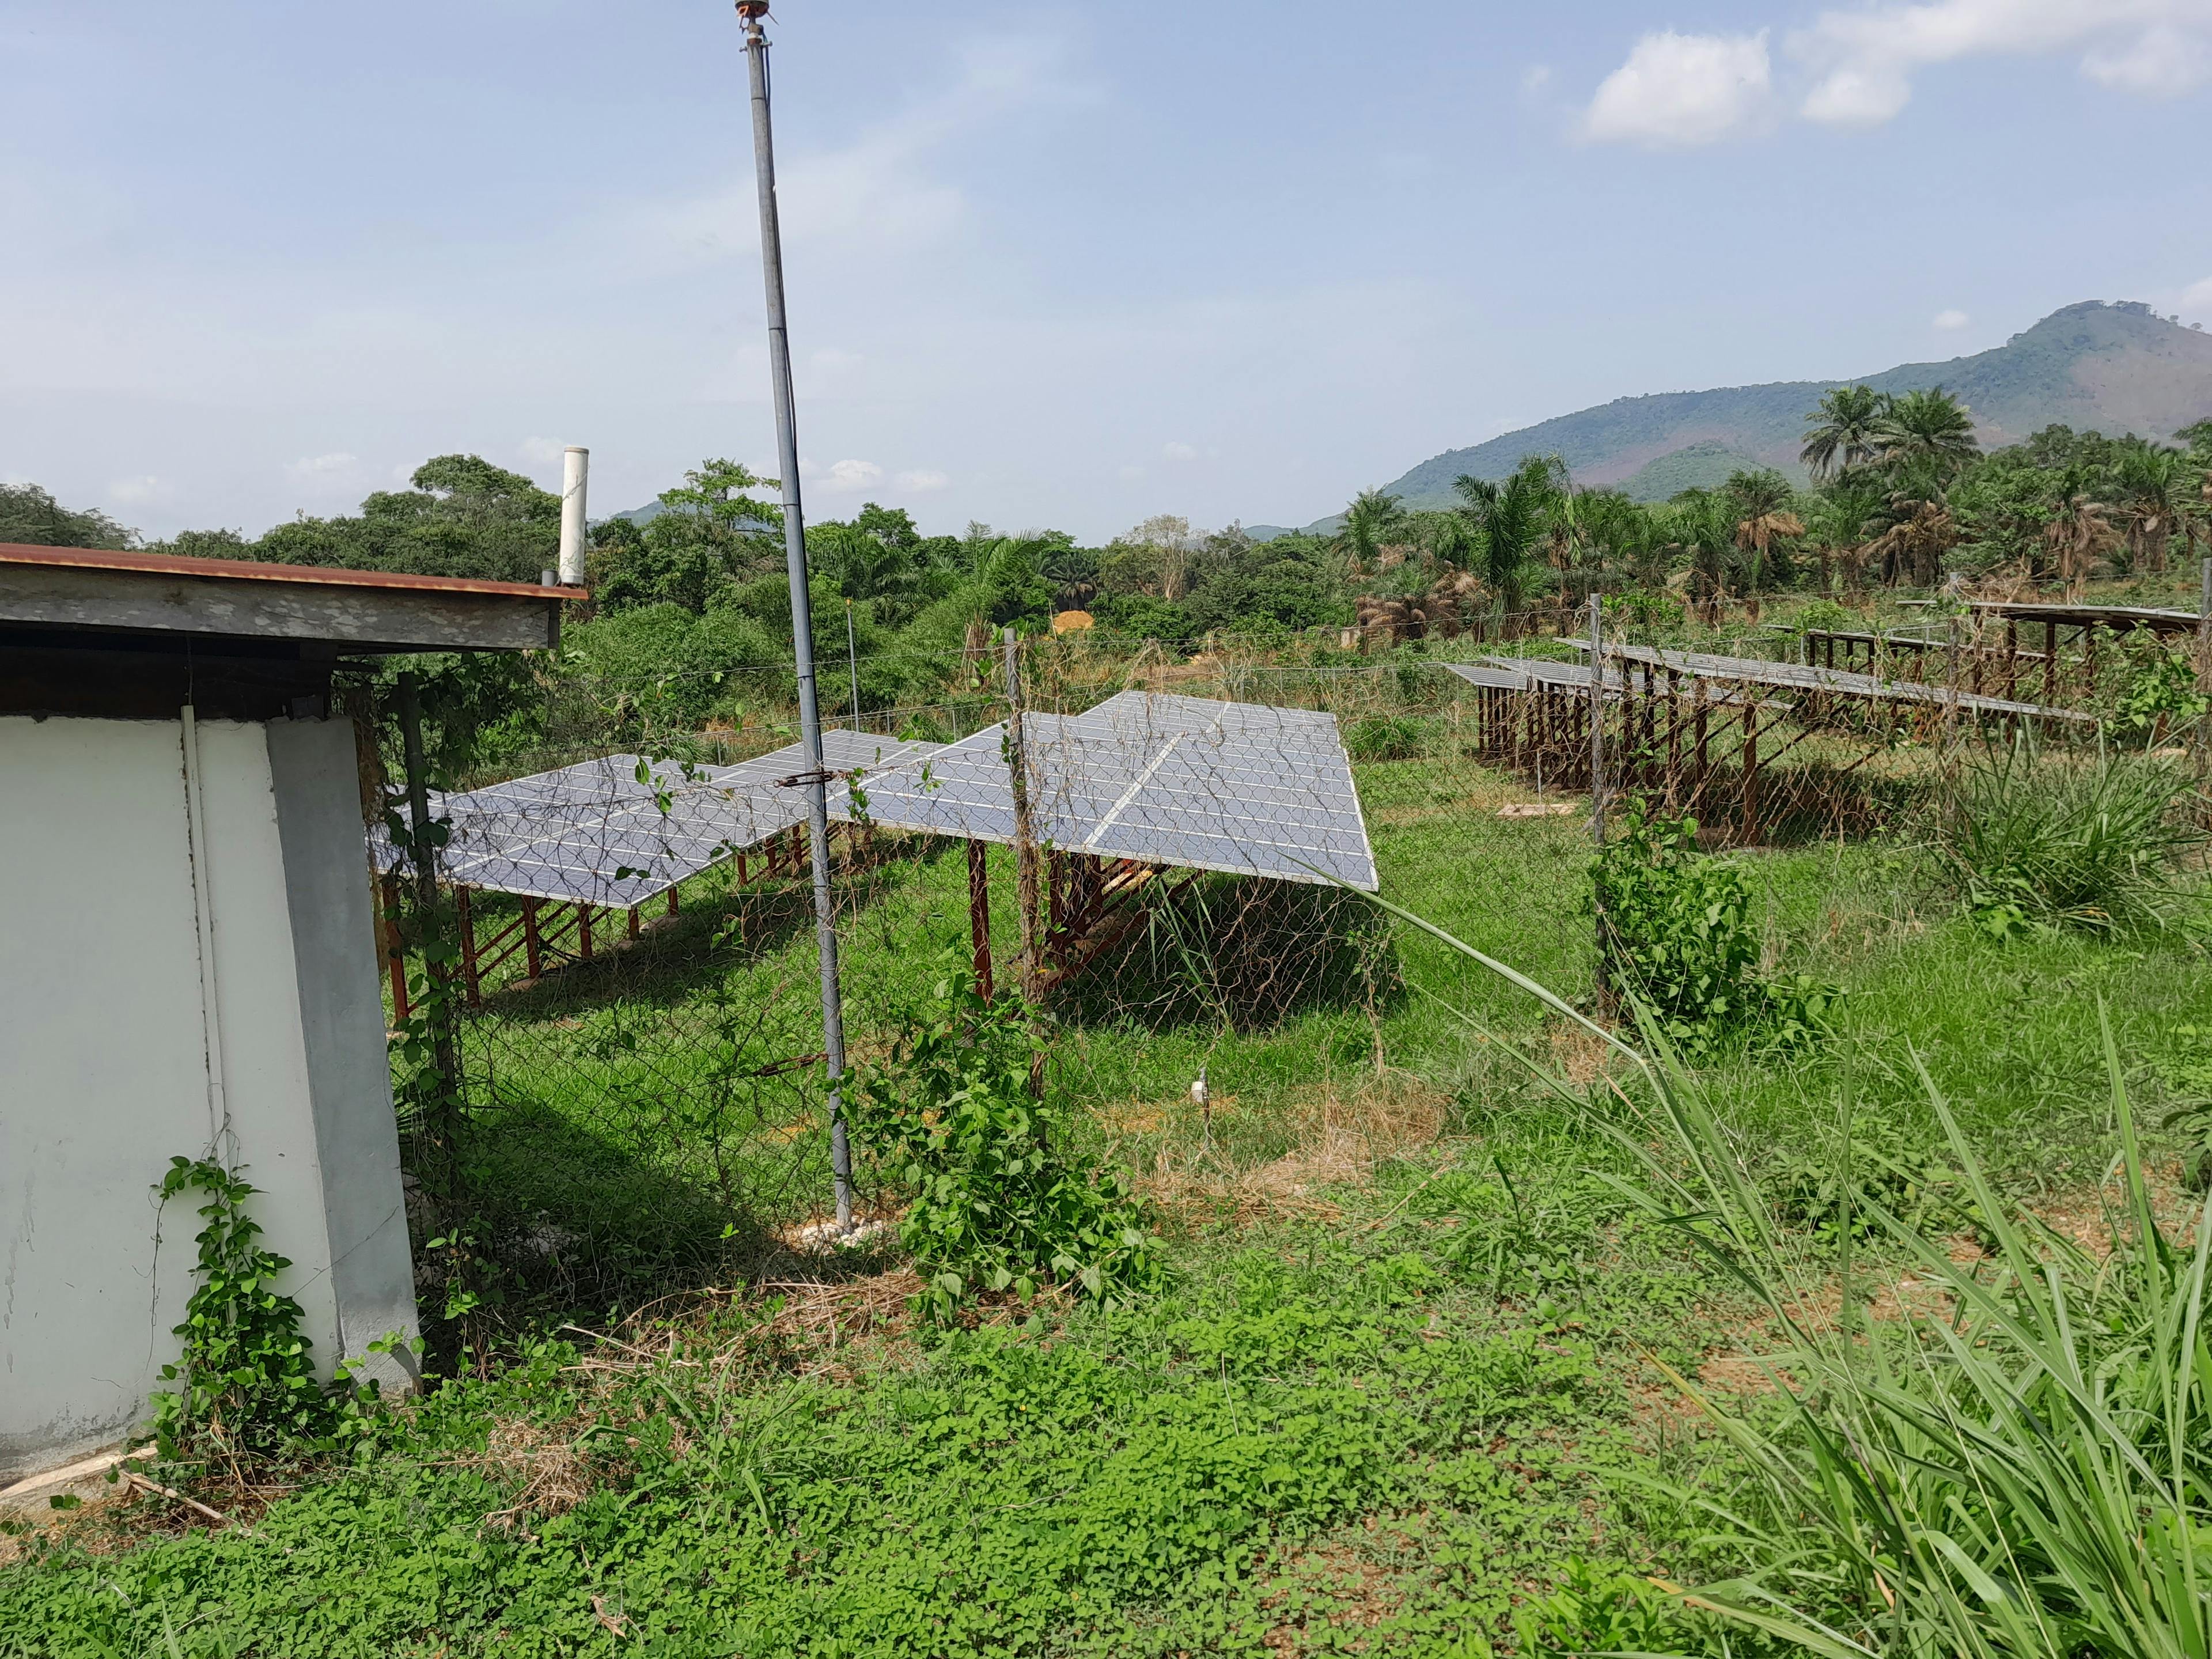 Existing solar PV system at Masanga Government Hospital, an off-grid health facility (credit: Albert Moiwa).